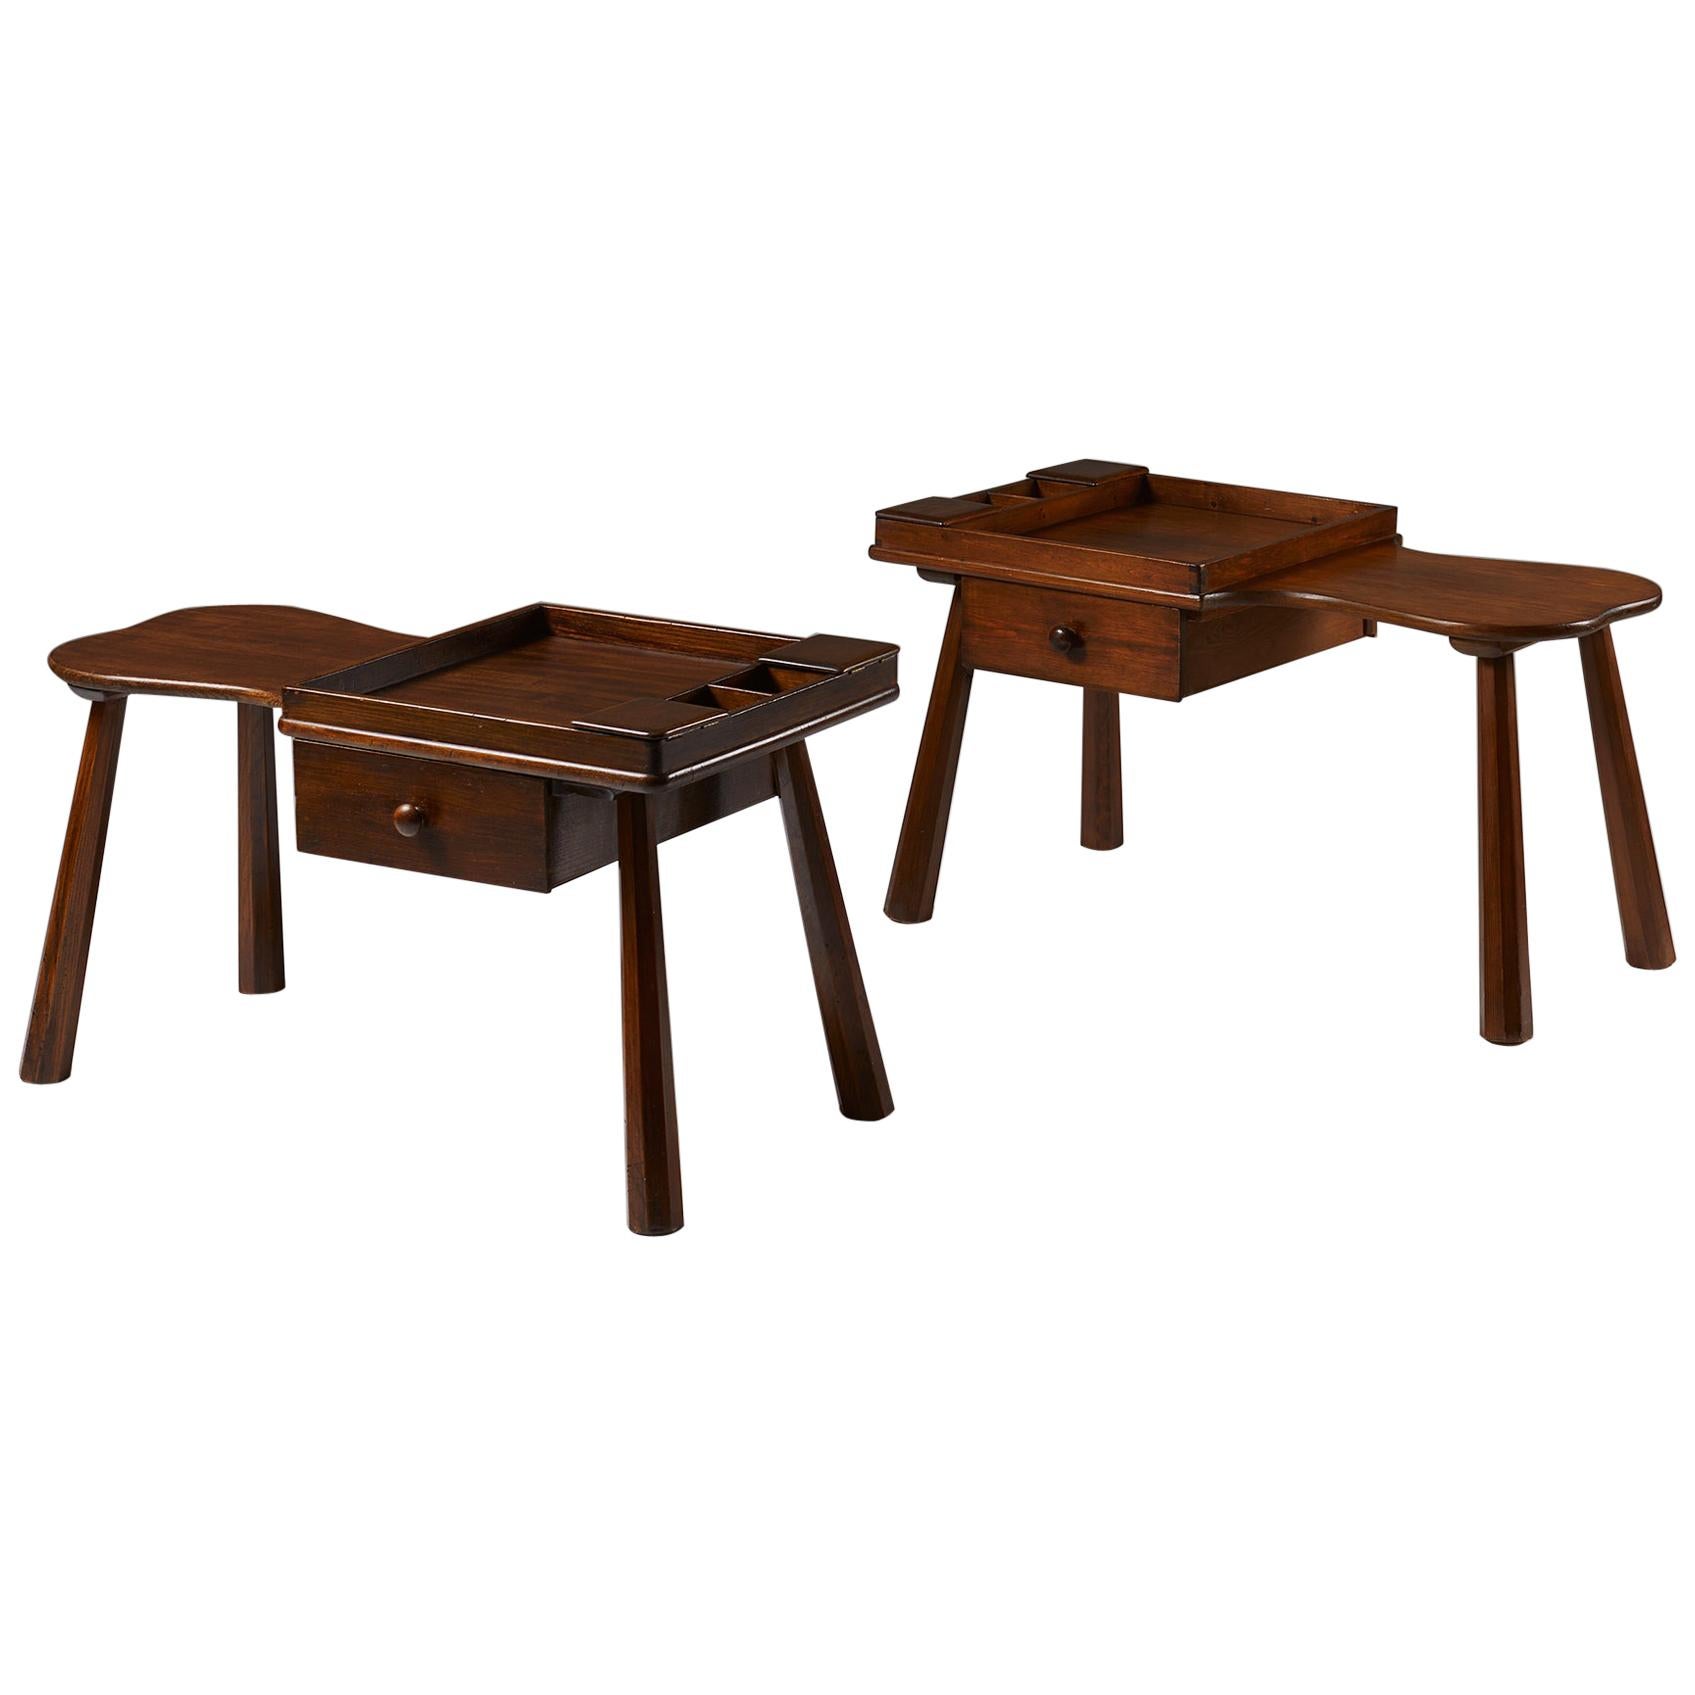 Pair of Side Tables Designed by Ericson Taserud, Sweden, 1963